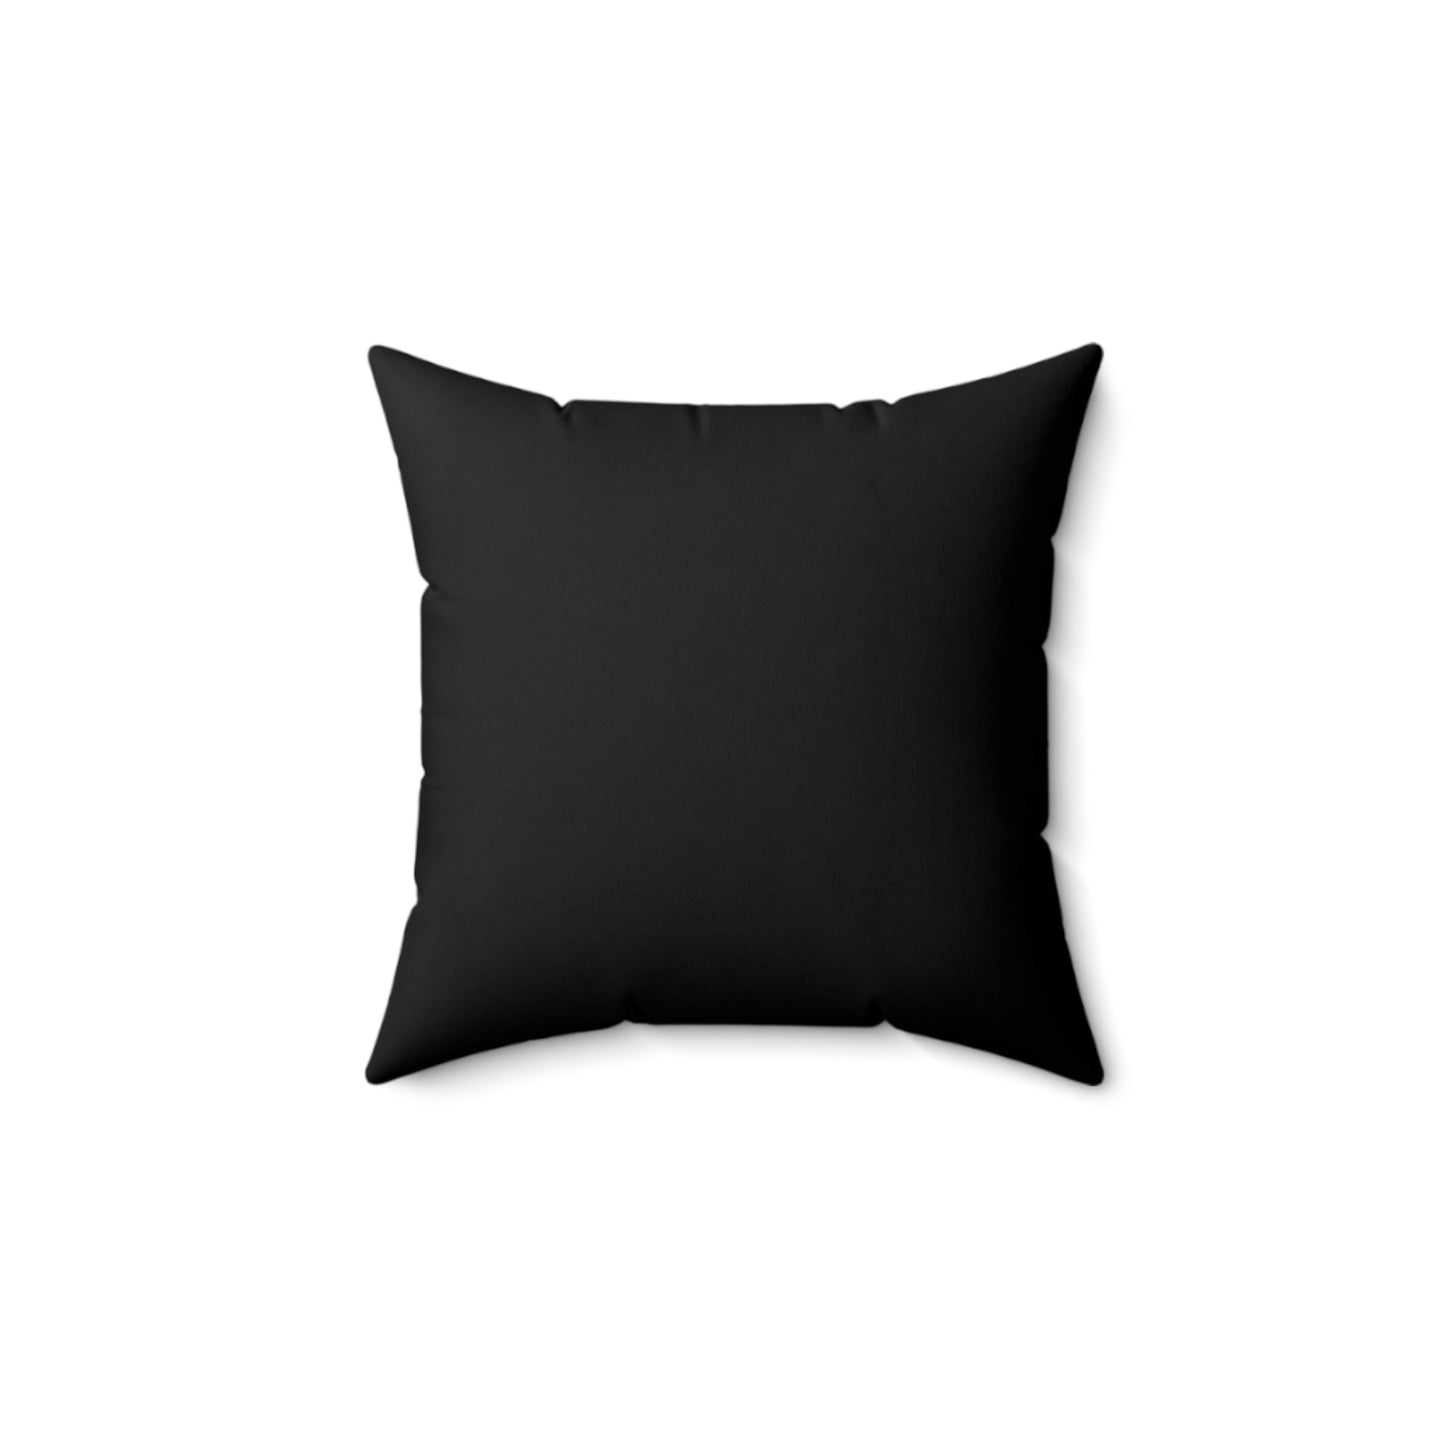 Circle Design White And Black Spun Polyester Square Pillow